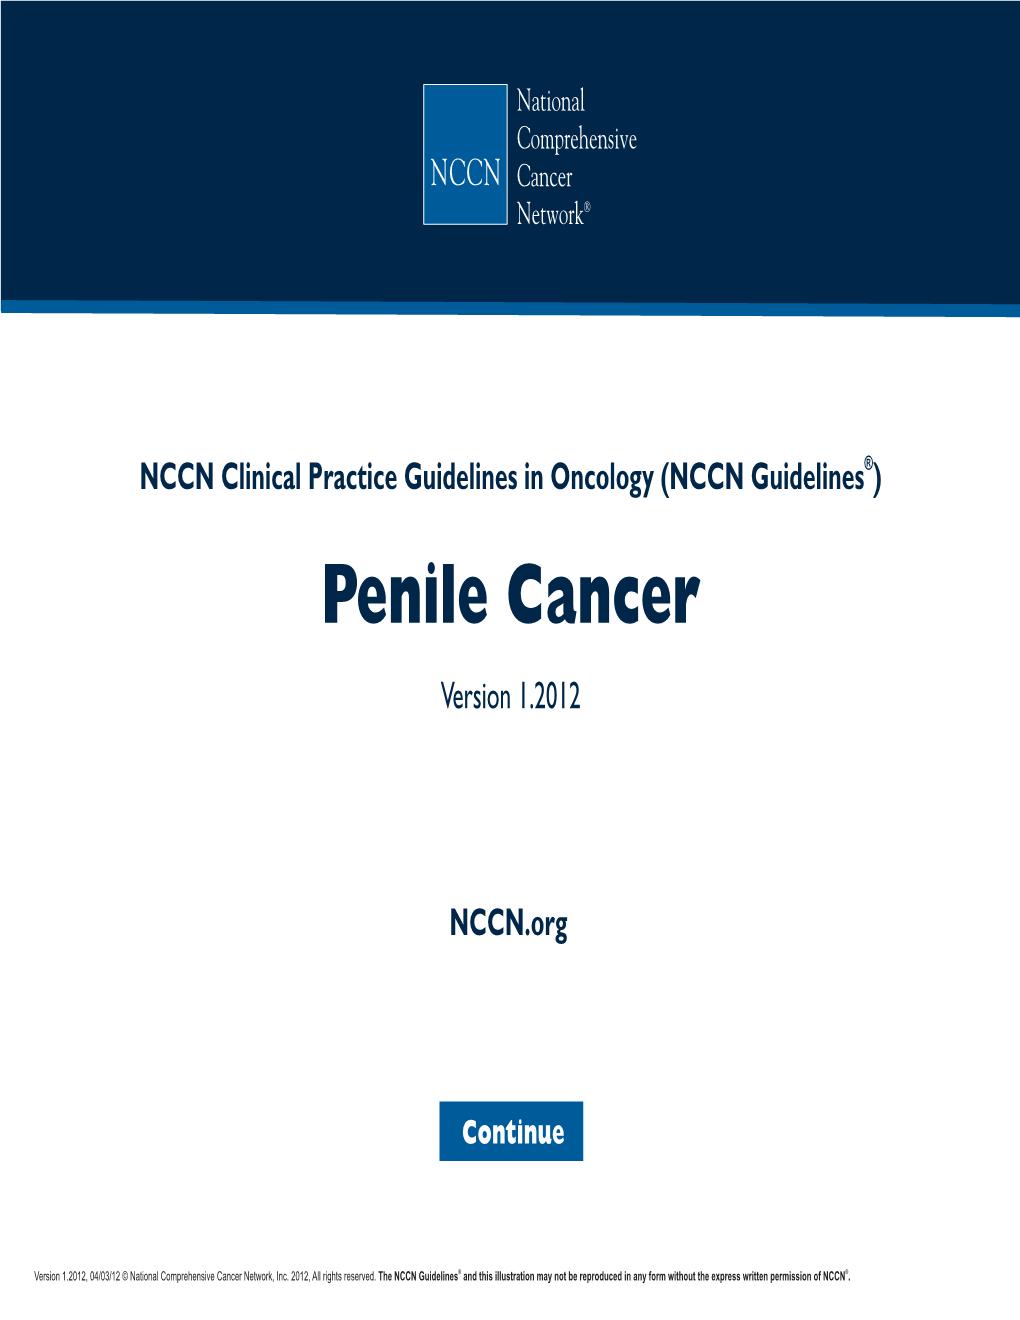 Penile Cancer TOC Discussion